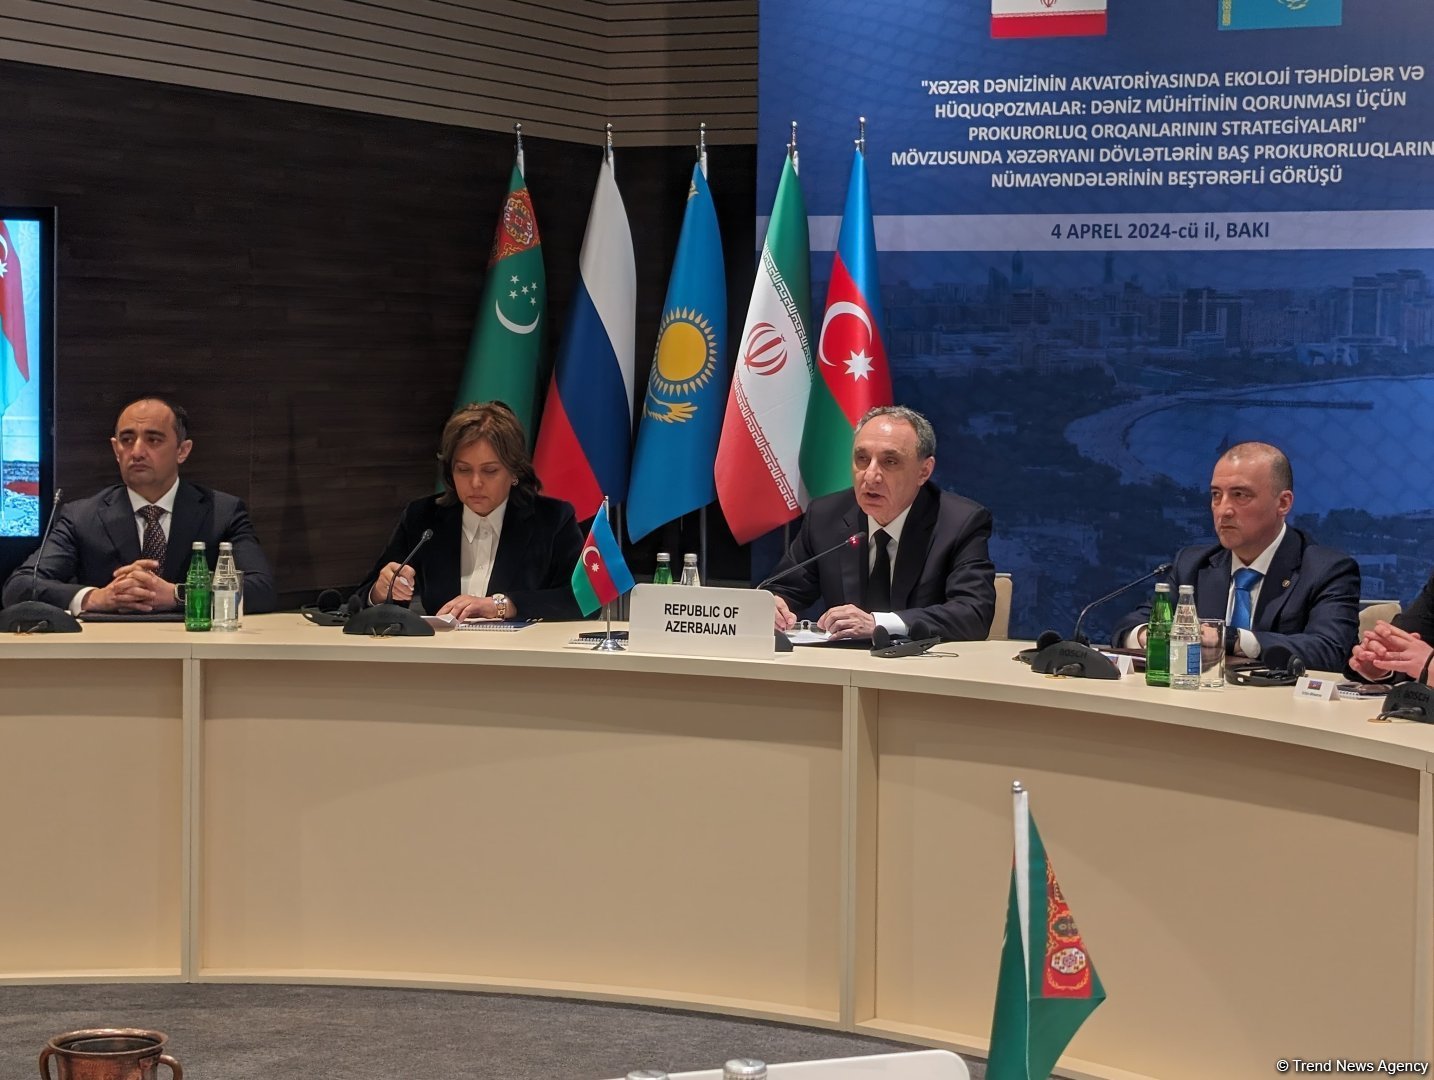 Caspian Sea possesses huge natural resources - Kazakh deputy prosecutor general